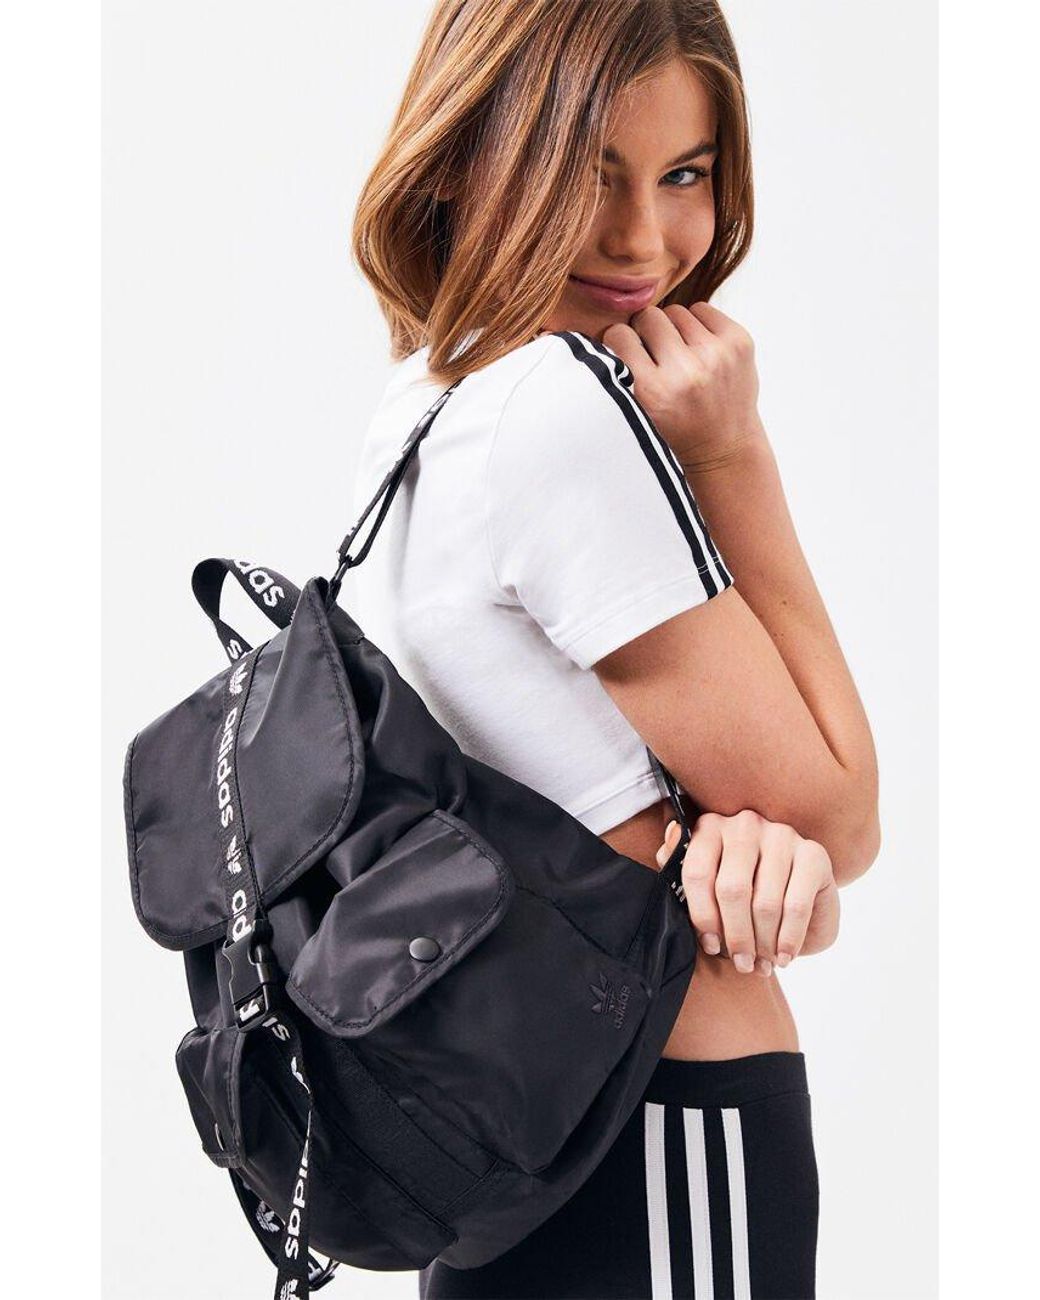 adidas Originals Utility Mini Backpack in Black/White (Black) | Lyst